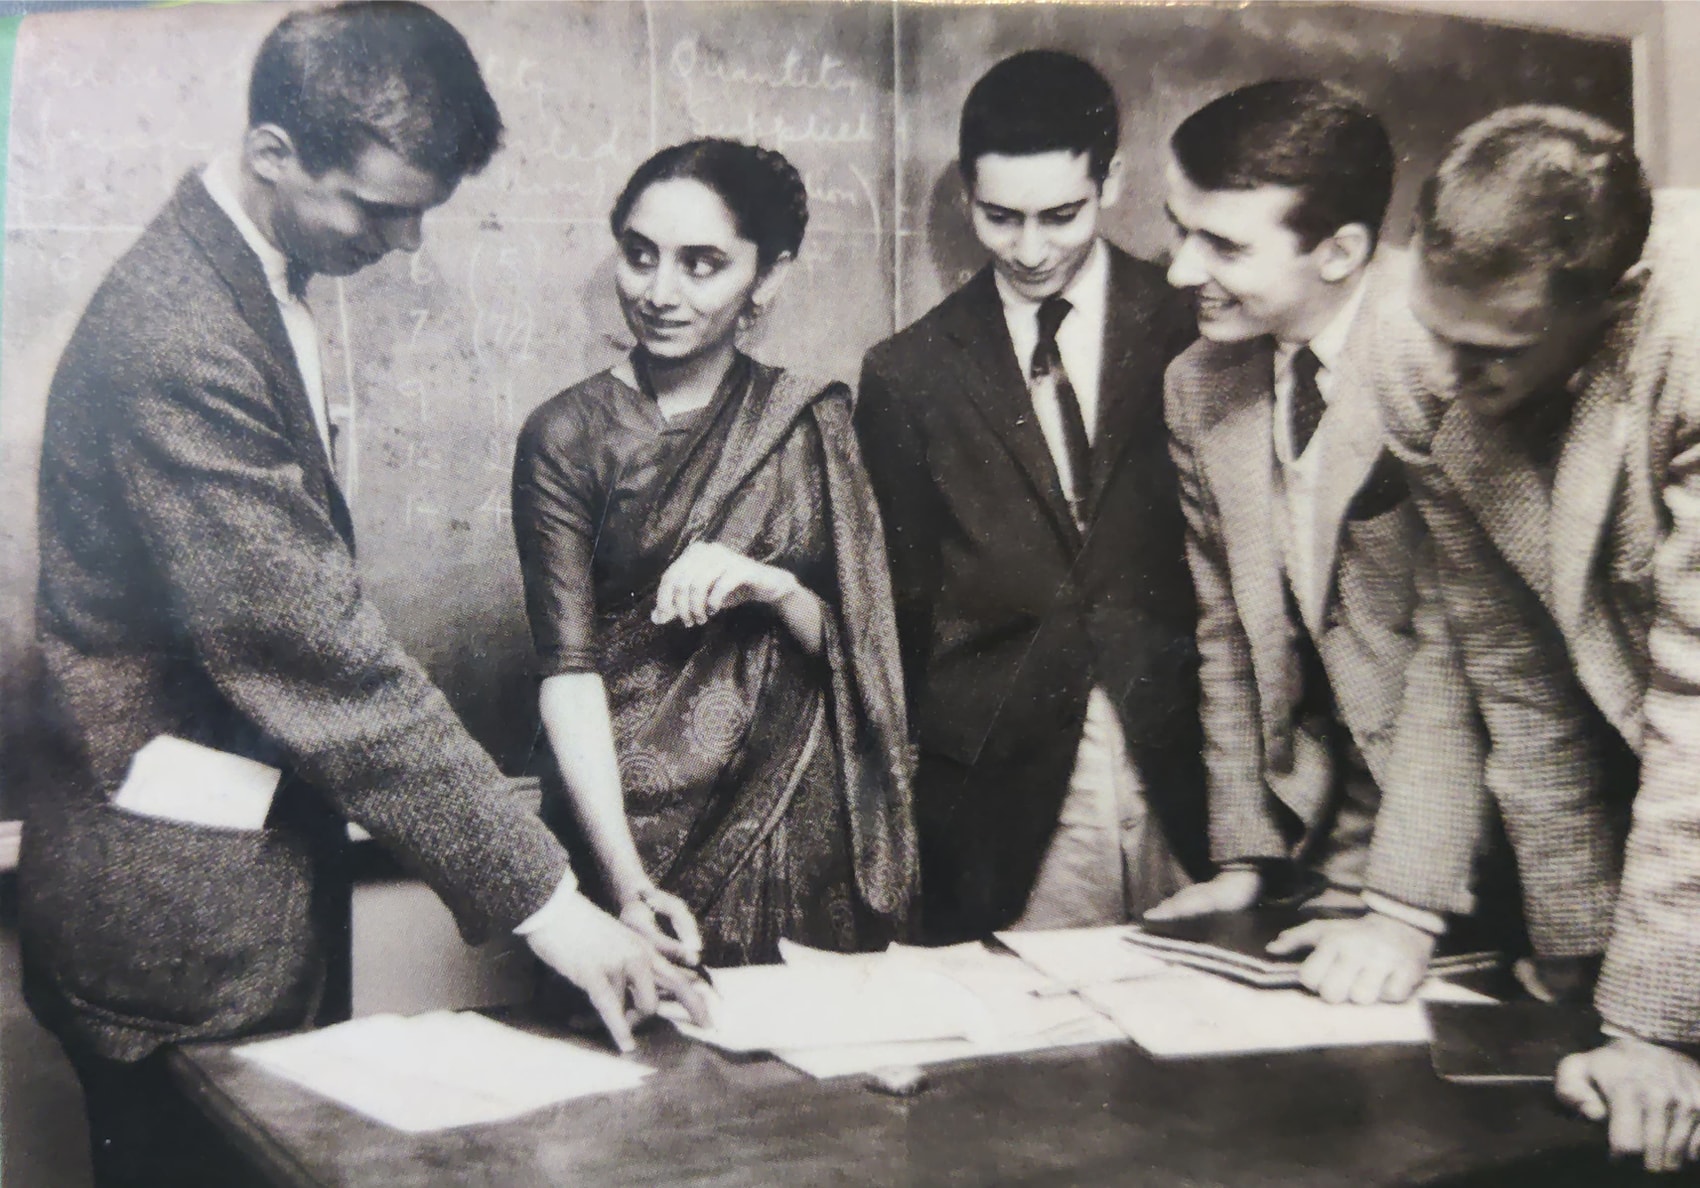 Desai, as teaching fellow, instructing students of Harvard Class of 1960